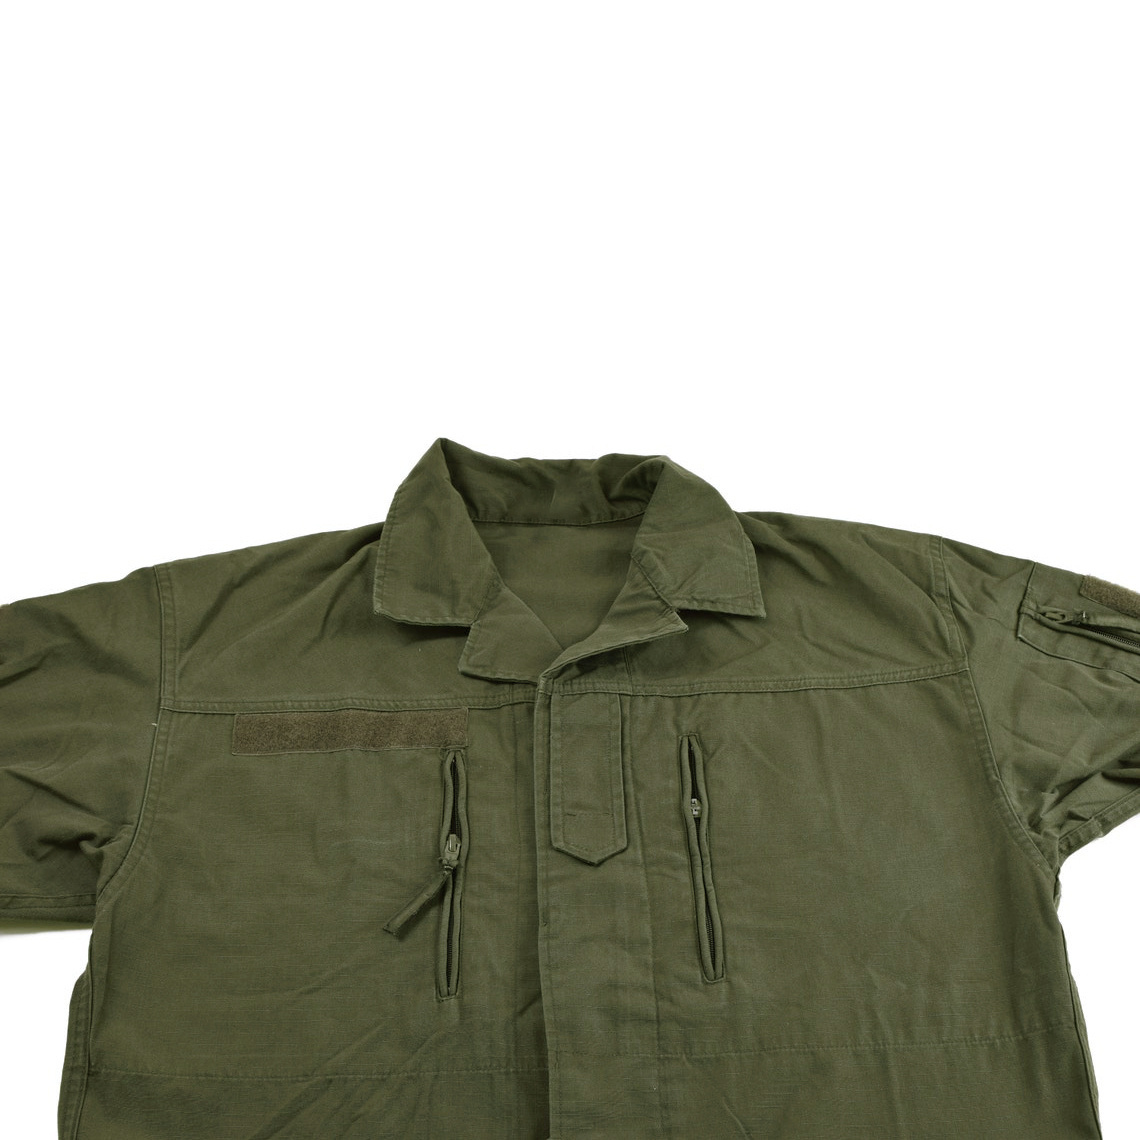 Men's Outdoor Zipper Multi-pocket Military Tactical Jacket